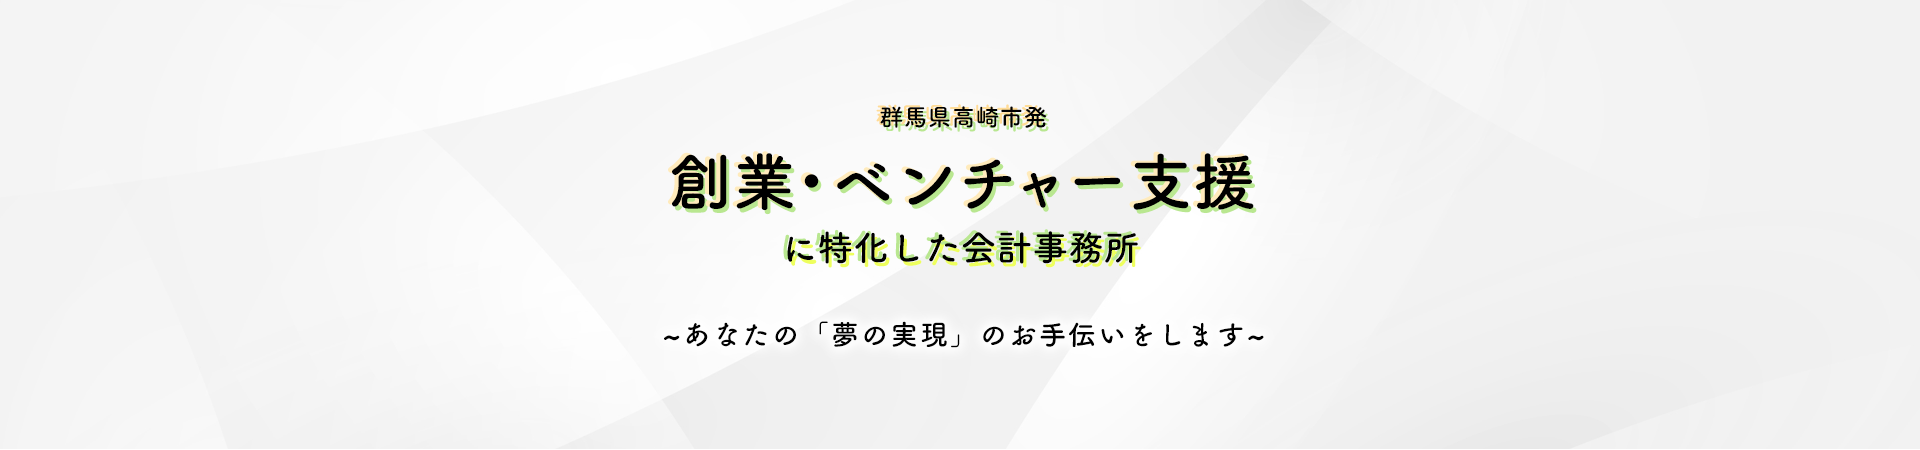 MINORASU会計事務所のホームページ